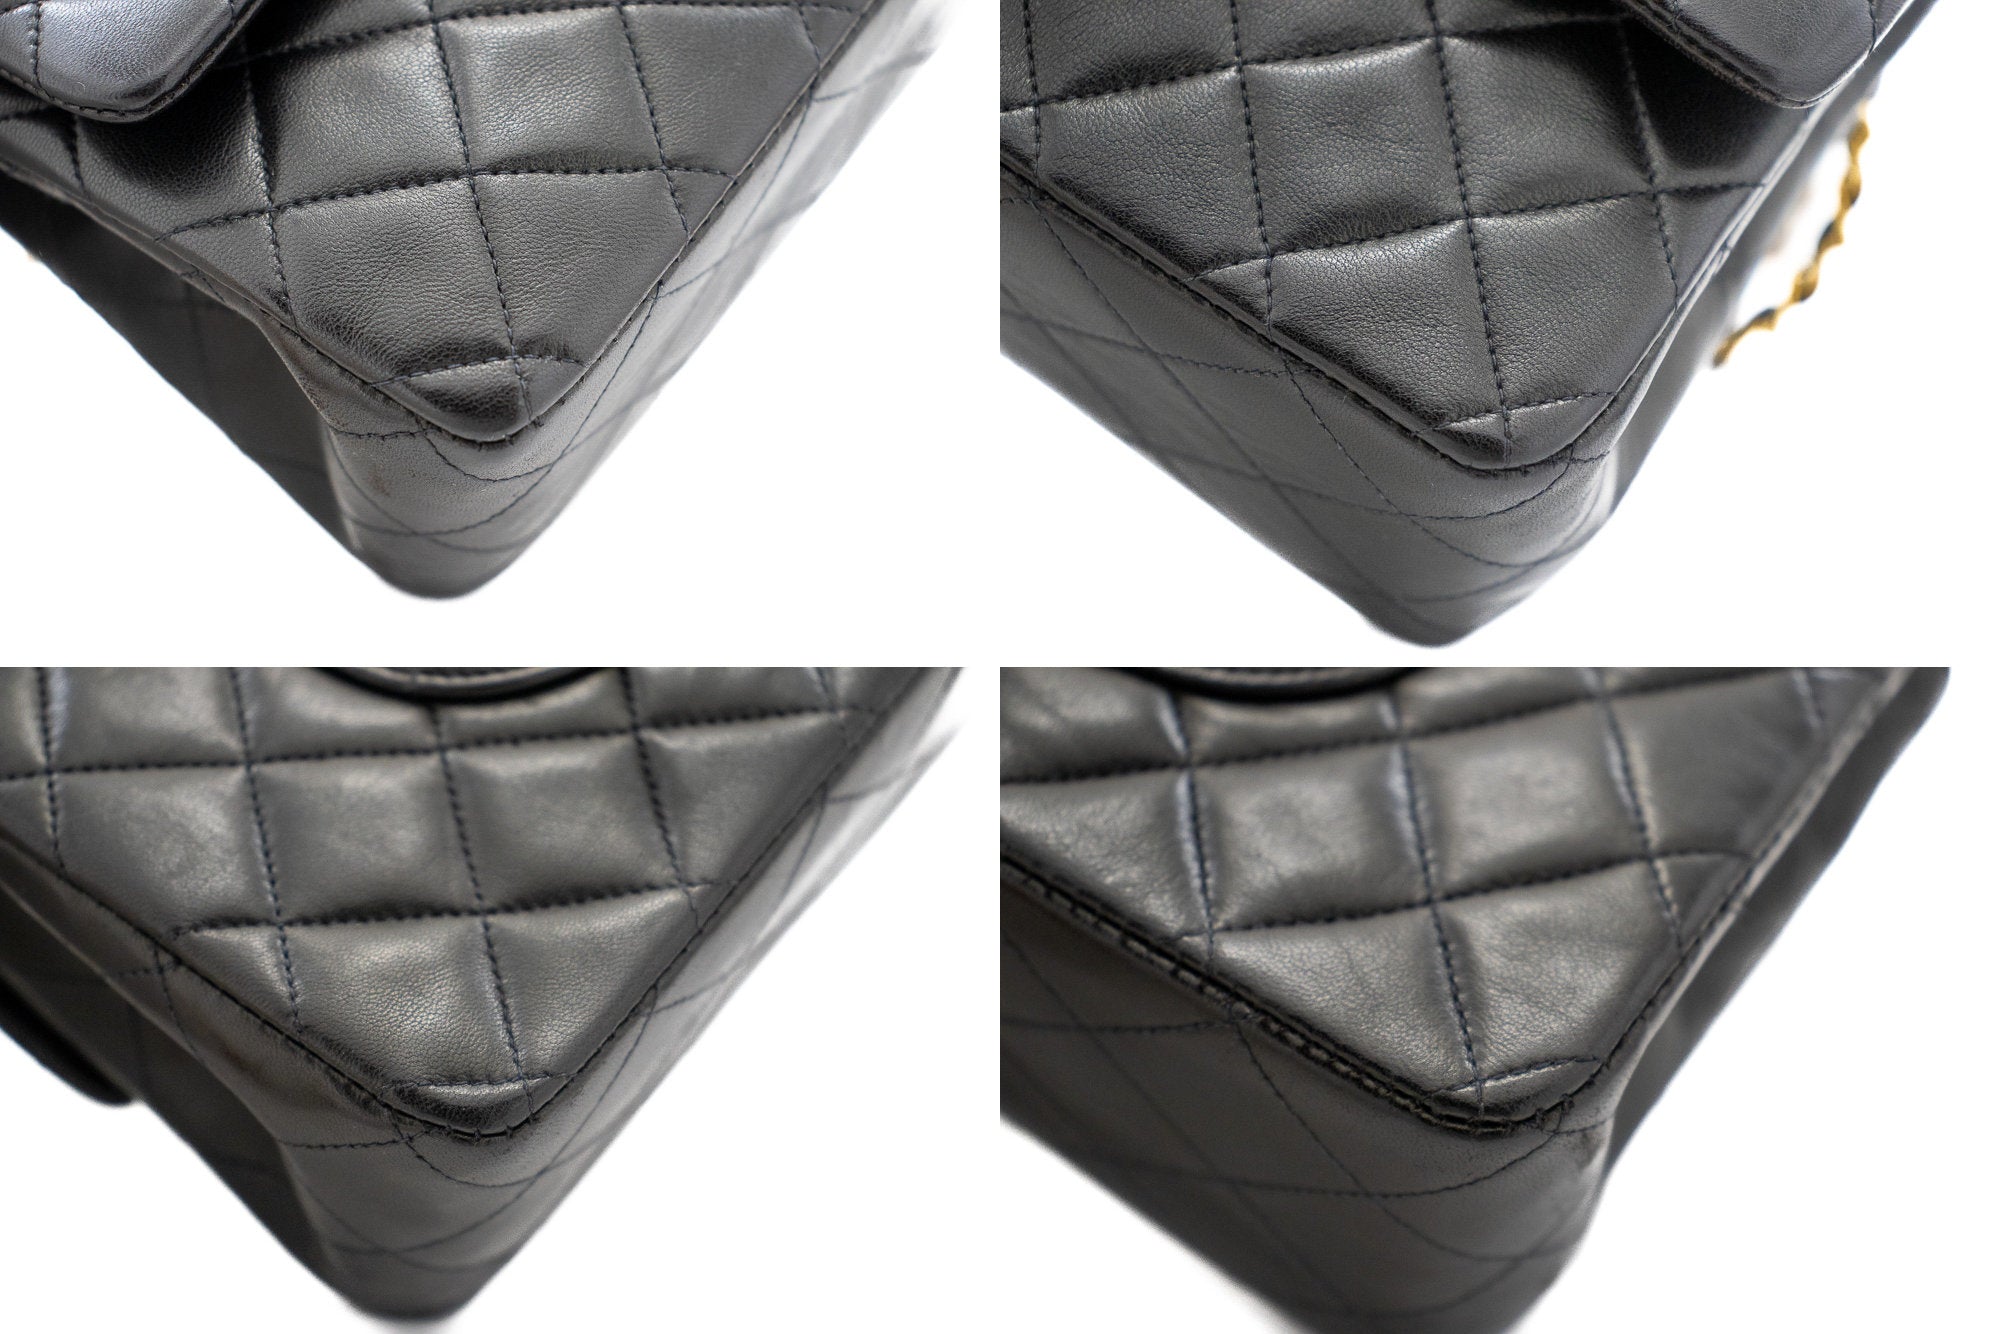 CHANEL Classic Double Flap 10 Chain Shoulder Bag Black Lambskin